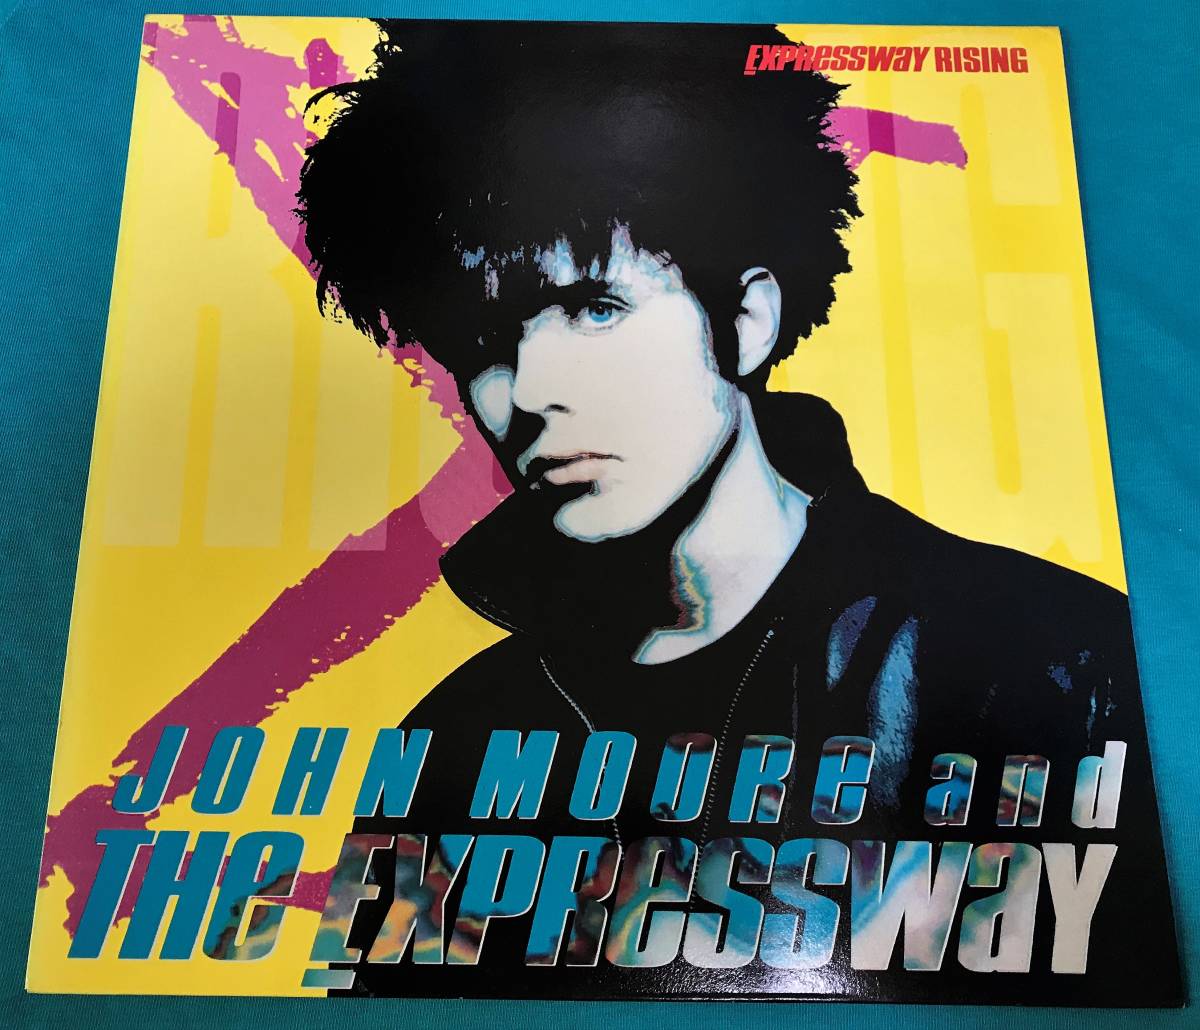 LP●John Moore&The Expressway / Expressway Rising UK оригинал  пластинка Polydor839 379-1